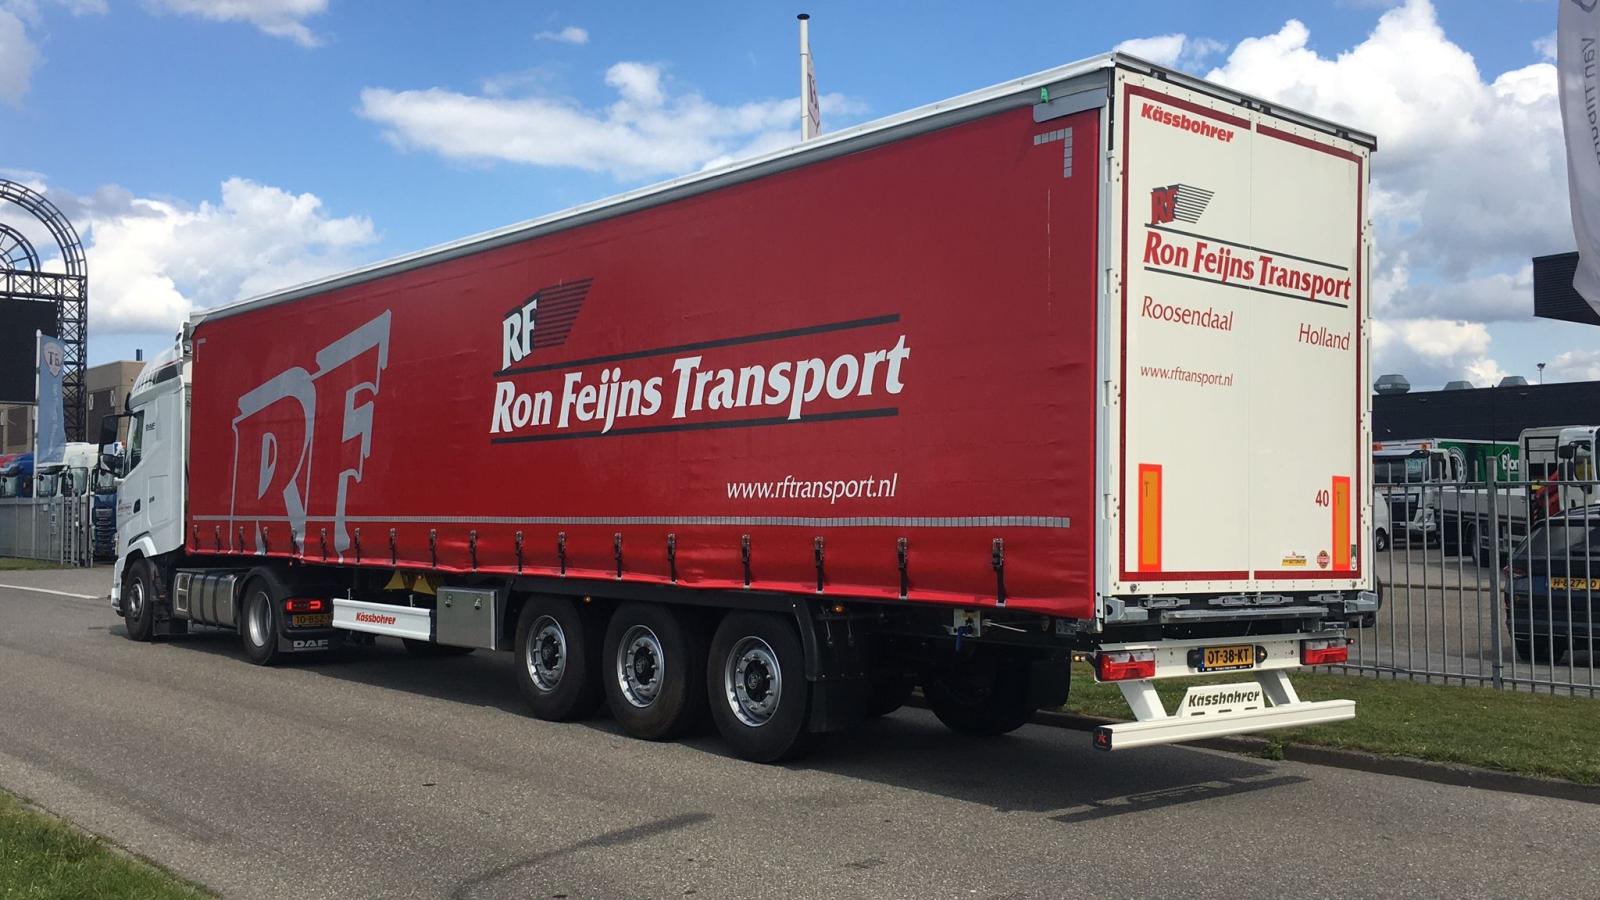 Ron Feijns Transport